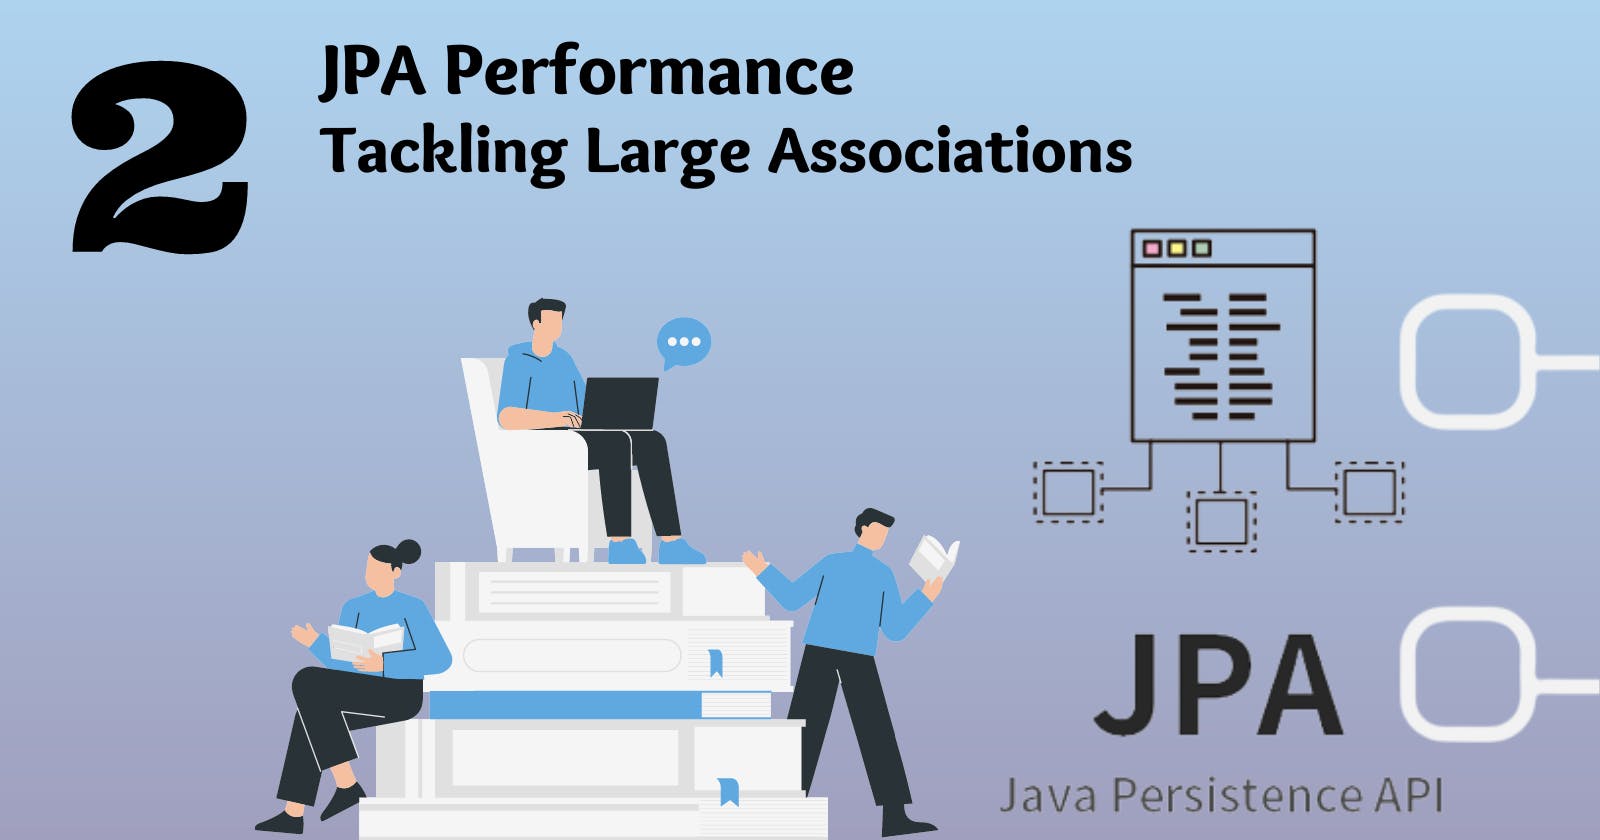 JPA Performance: Tackling Large Associations